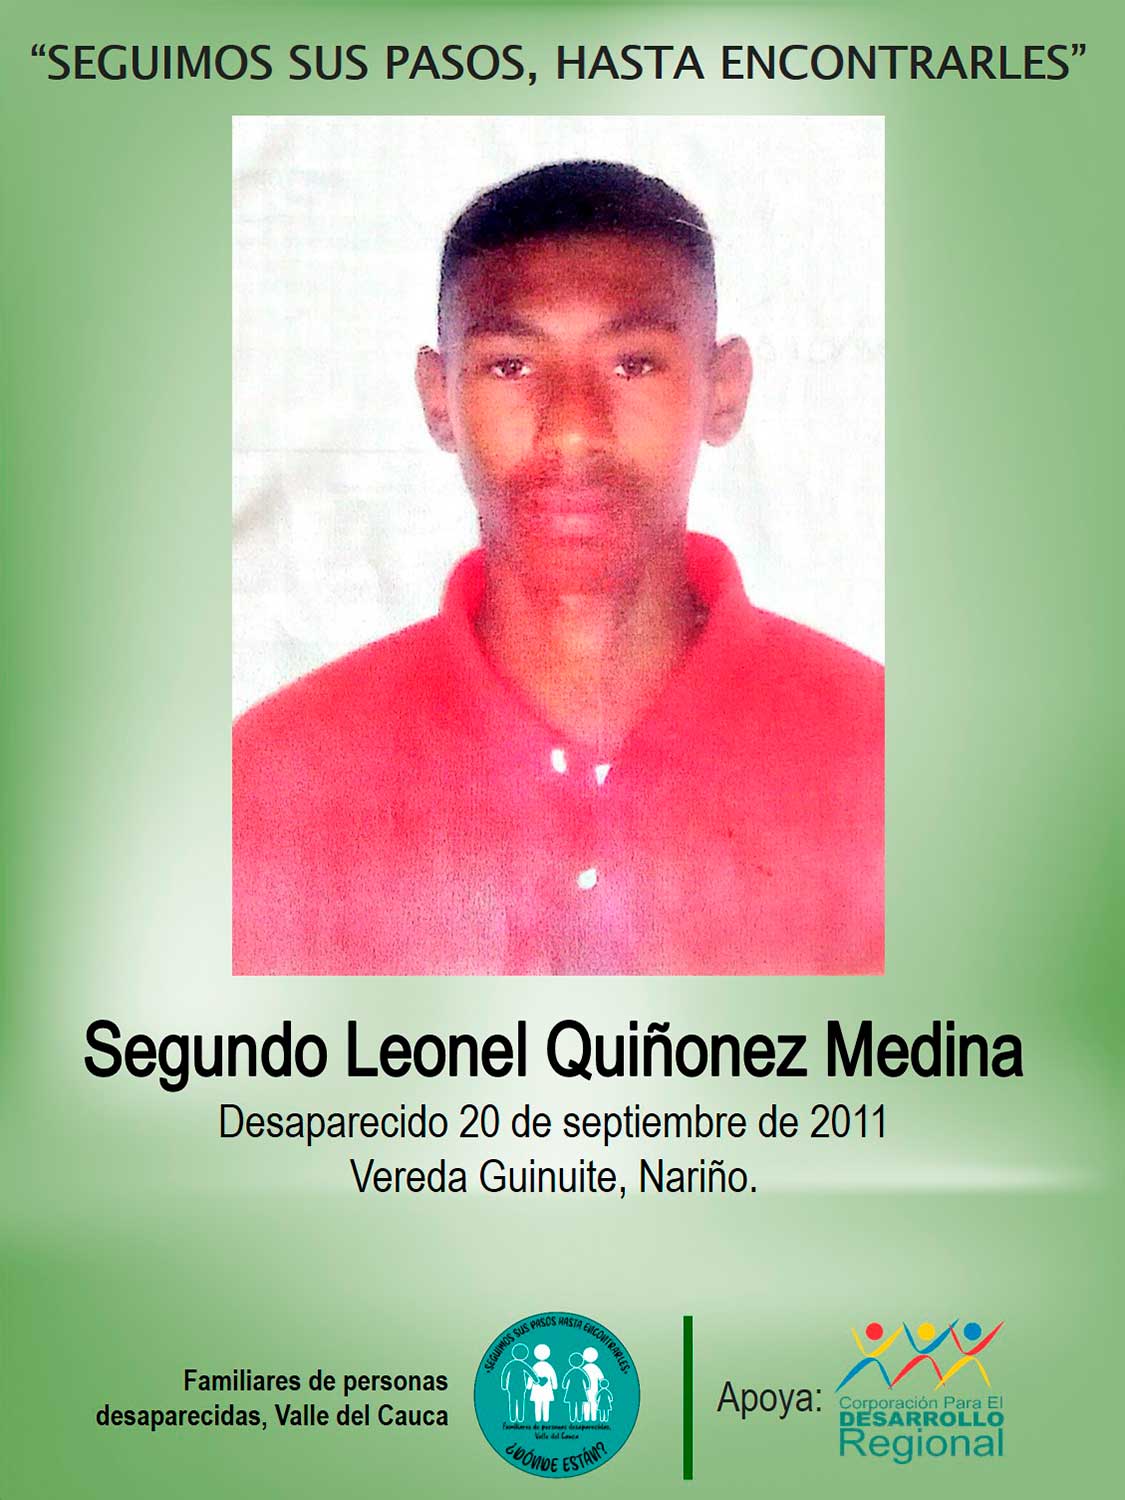 Segundo Leonel Quiñonez Medina